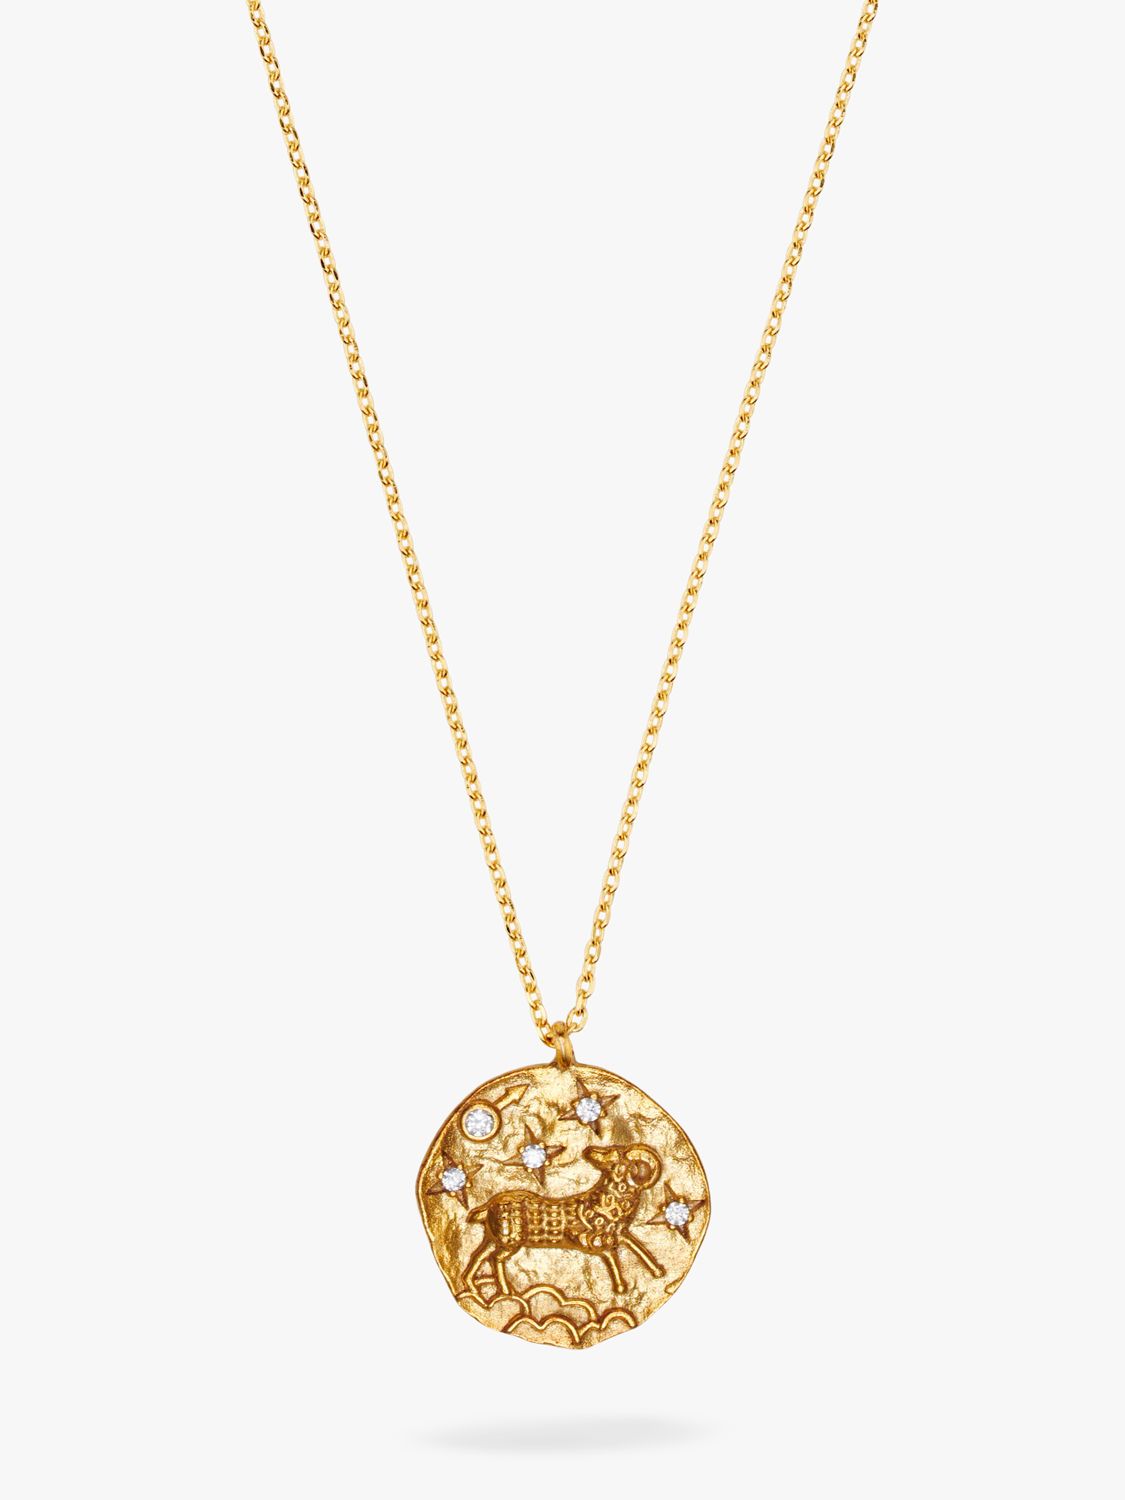 Buy Orelia Zodiac Medallion Necklace, Gold Online at johnlewis.com